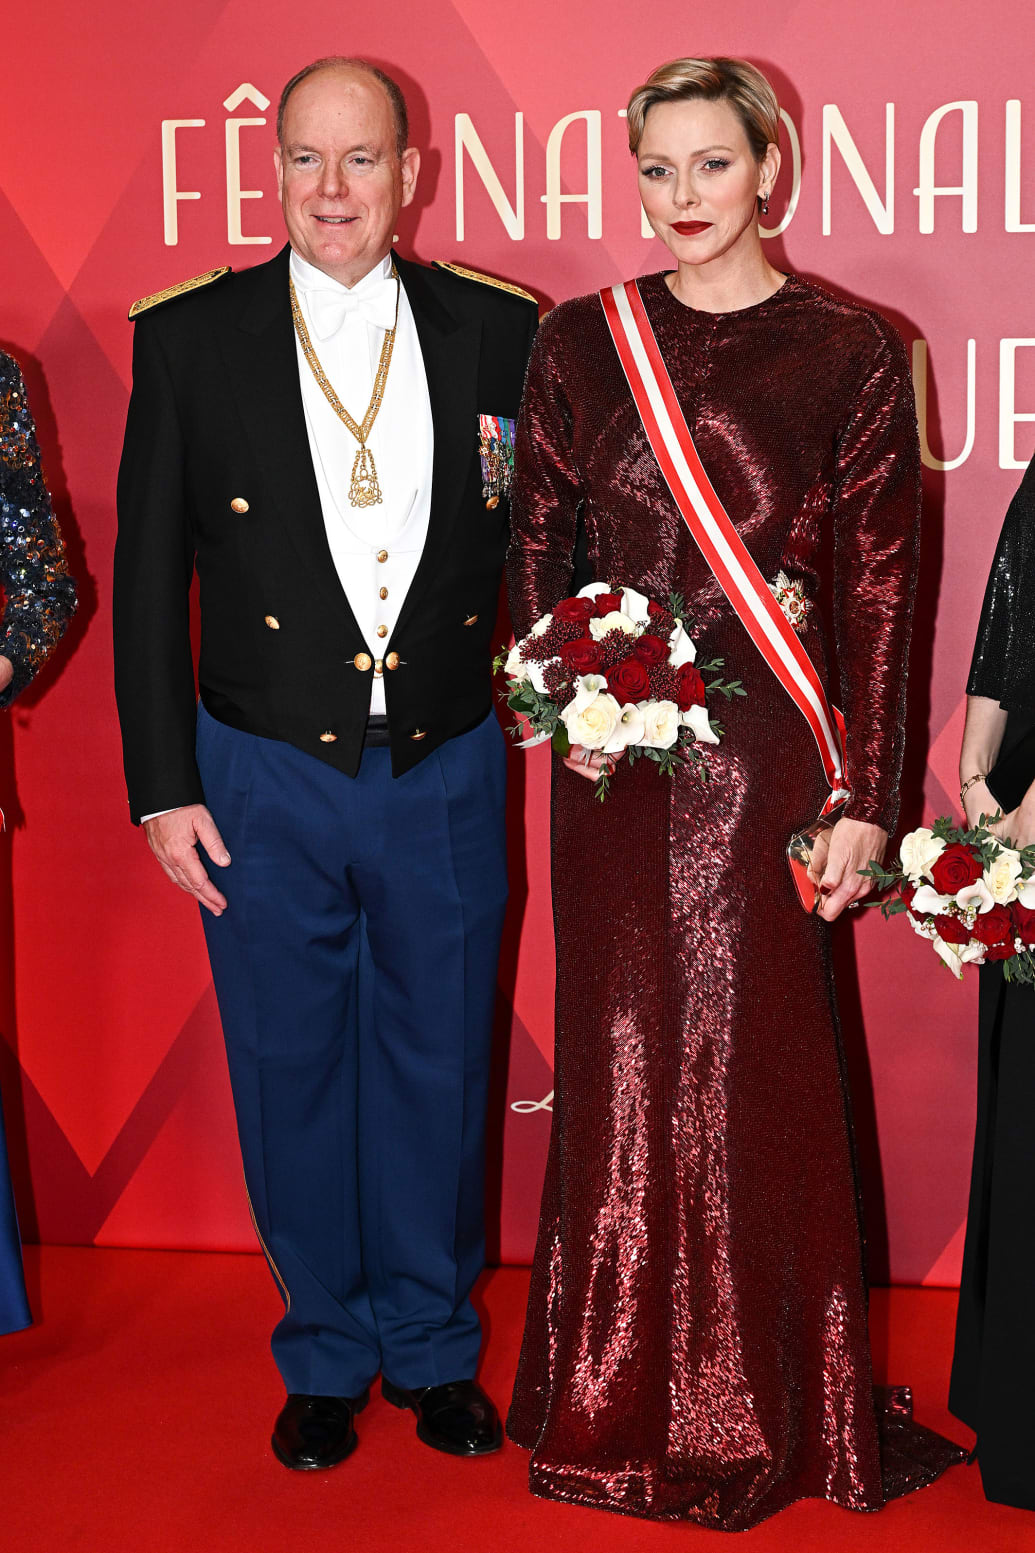 A photograph of Prince Albert II of Monaco and Princess Charlene of Monaco.